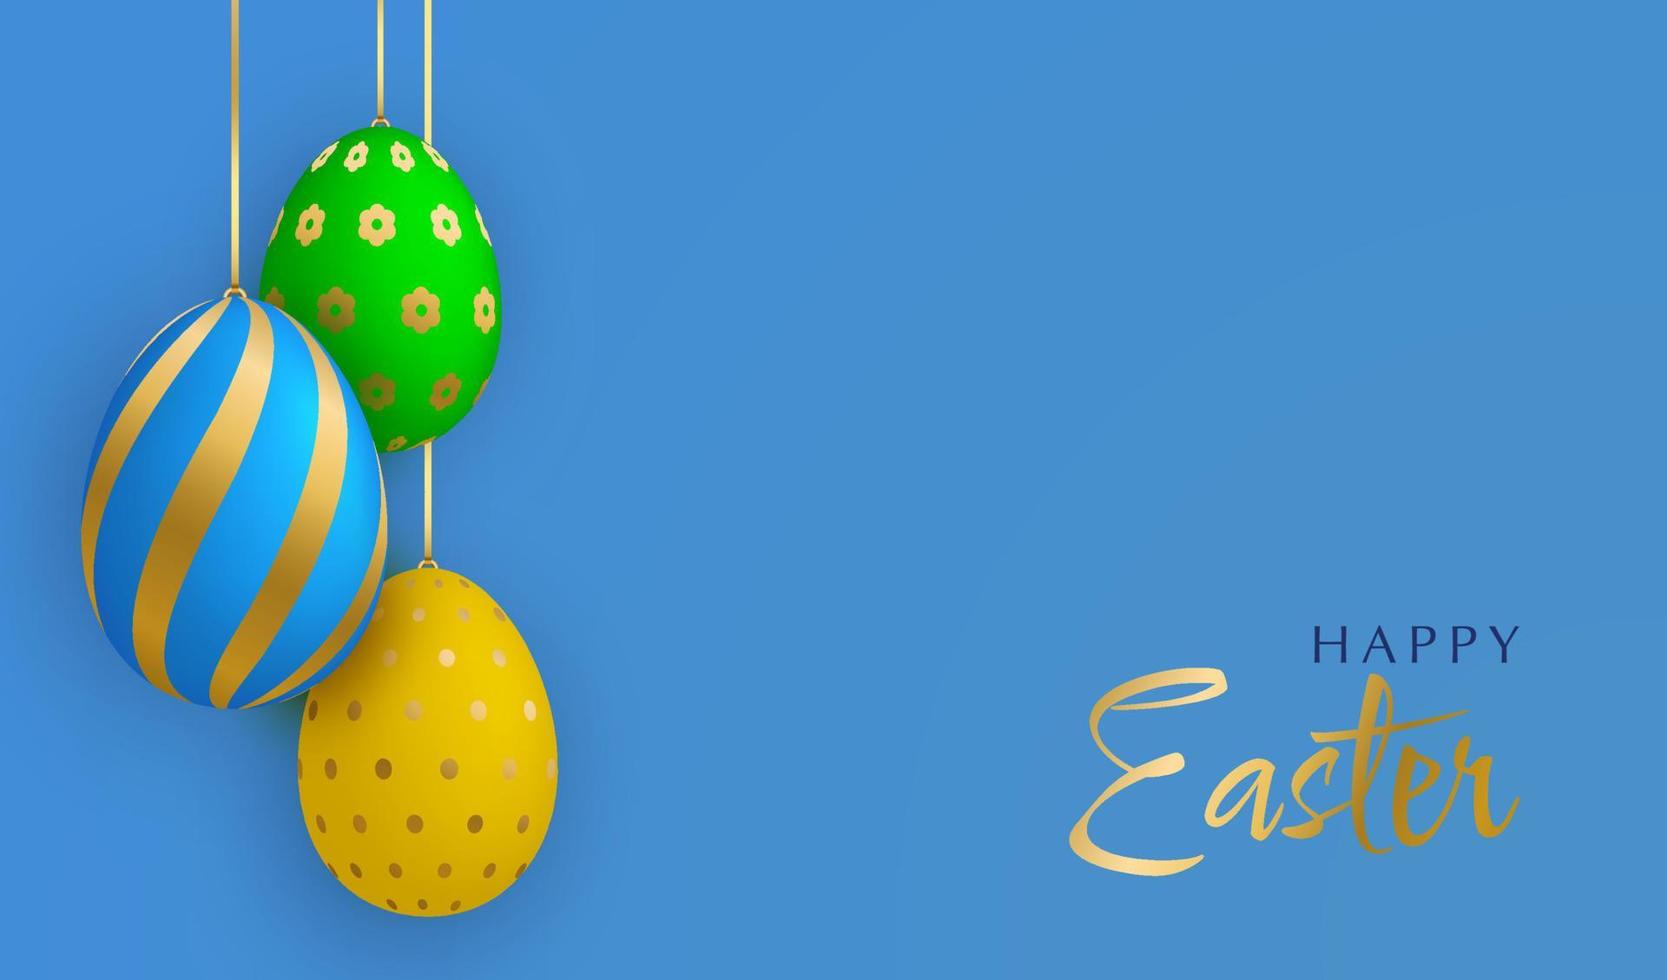 contento Pascua de Resurrección saludo tarjeta. linda 3d huevos colgando en cintas en azul antecedentes. vector